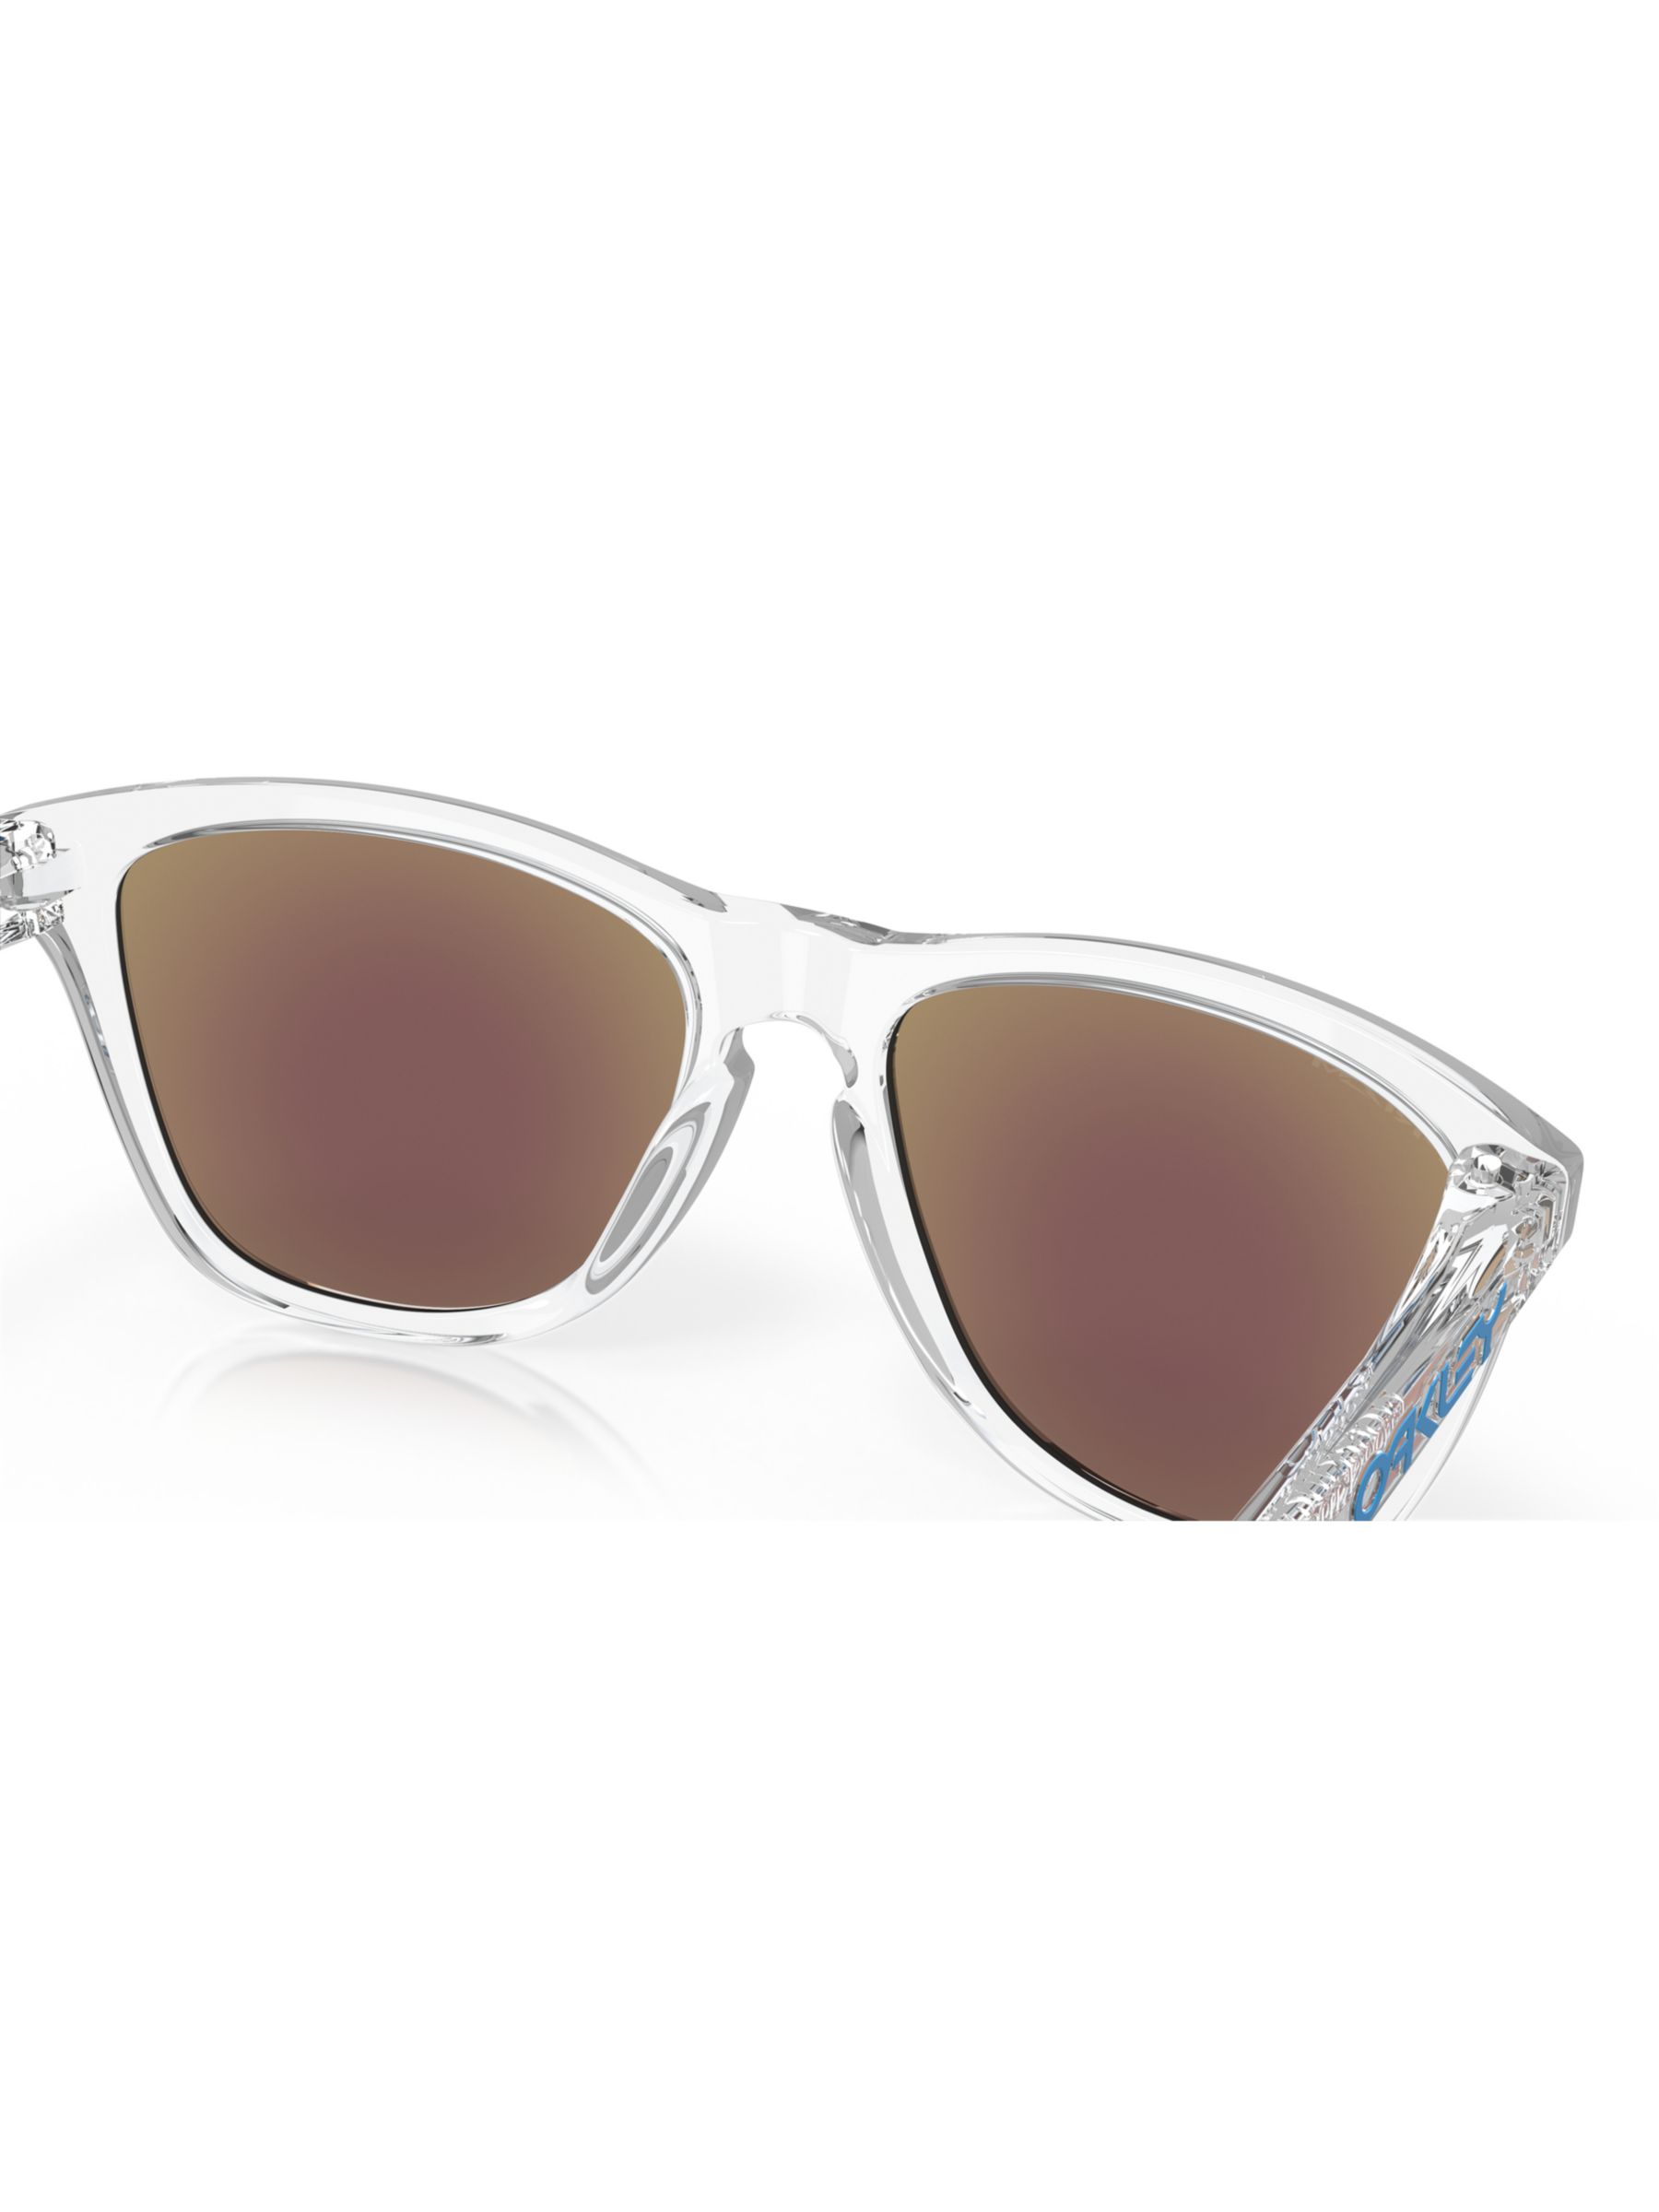 Oakley OO9013 Men's Frogskins Prizm Square Sunglasses, Clear/Iridium Sapphire